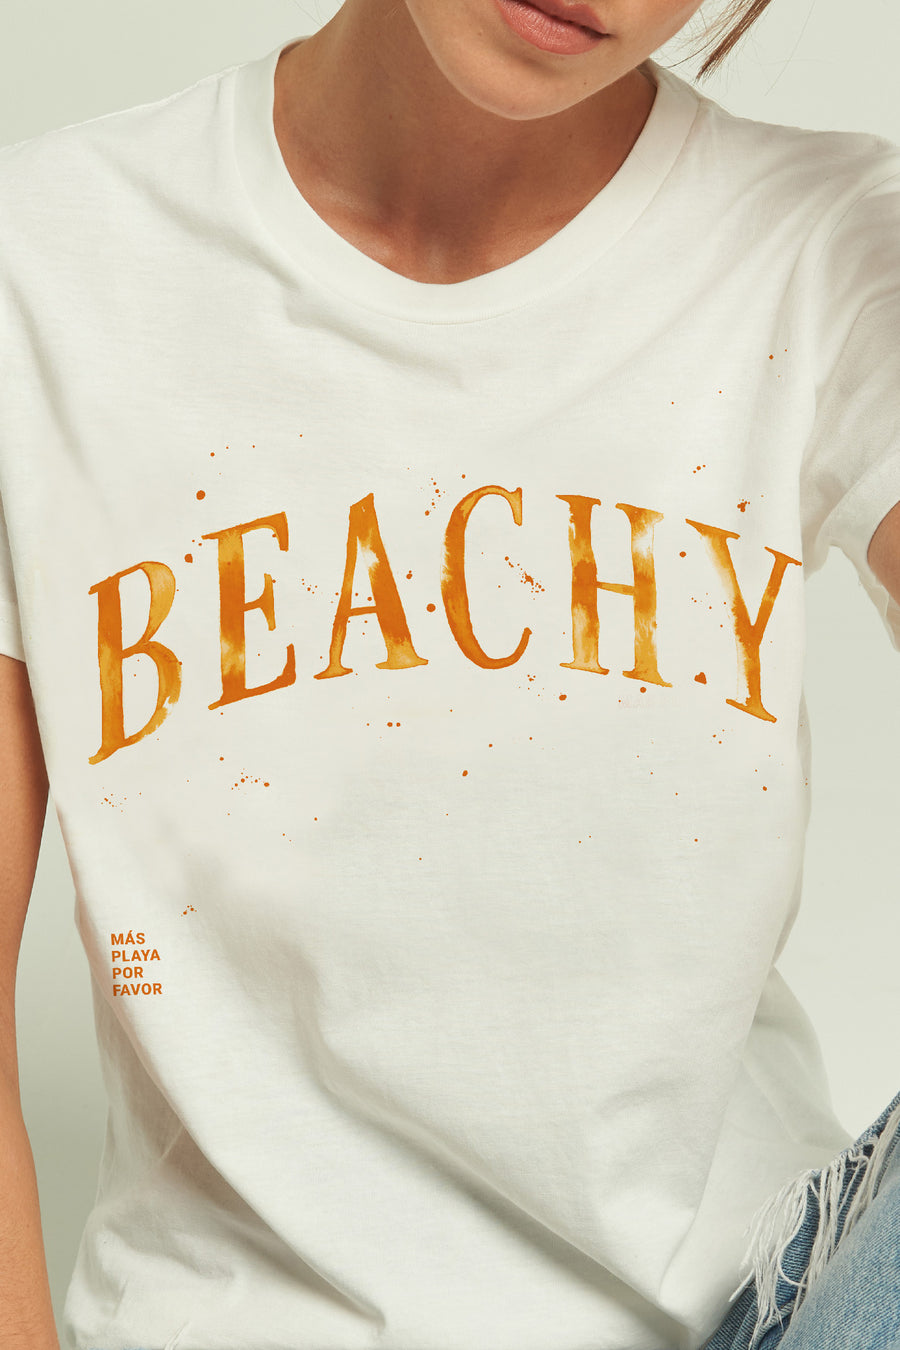 Beachy Tee - shopsigal